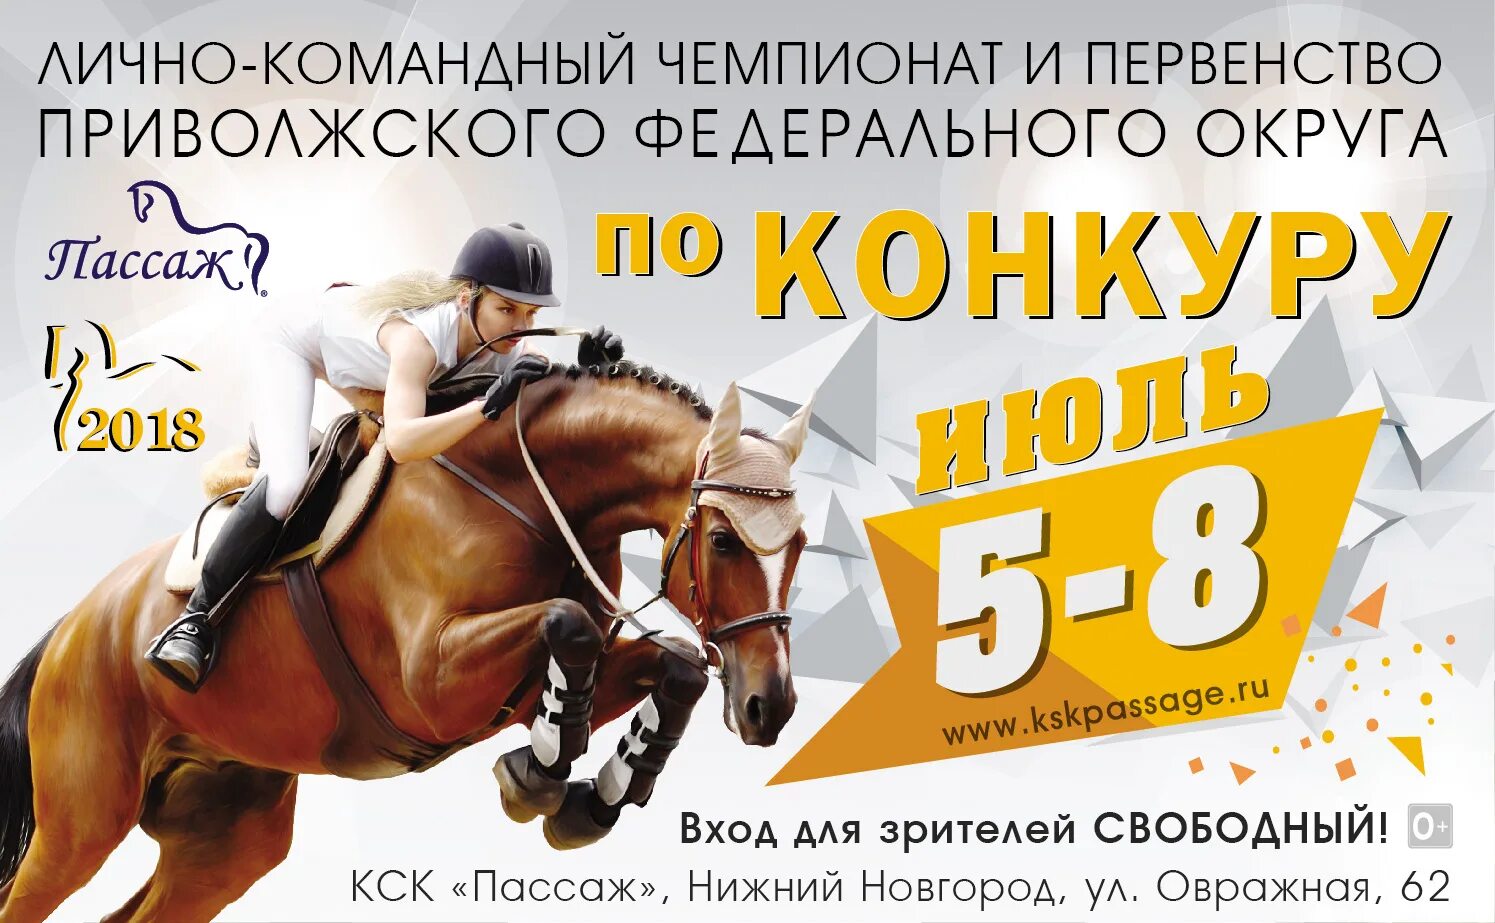 Реклама кск. Афиша конный спорт. Соревнования по конному спорту афиша. Плакат на соревнования по конкуру. Конные соревнования афиша.